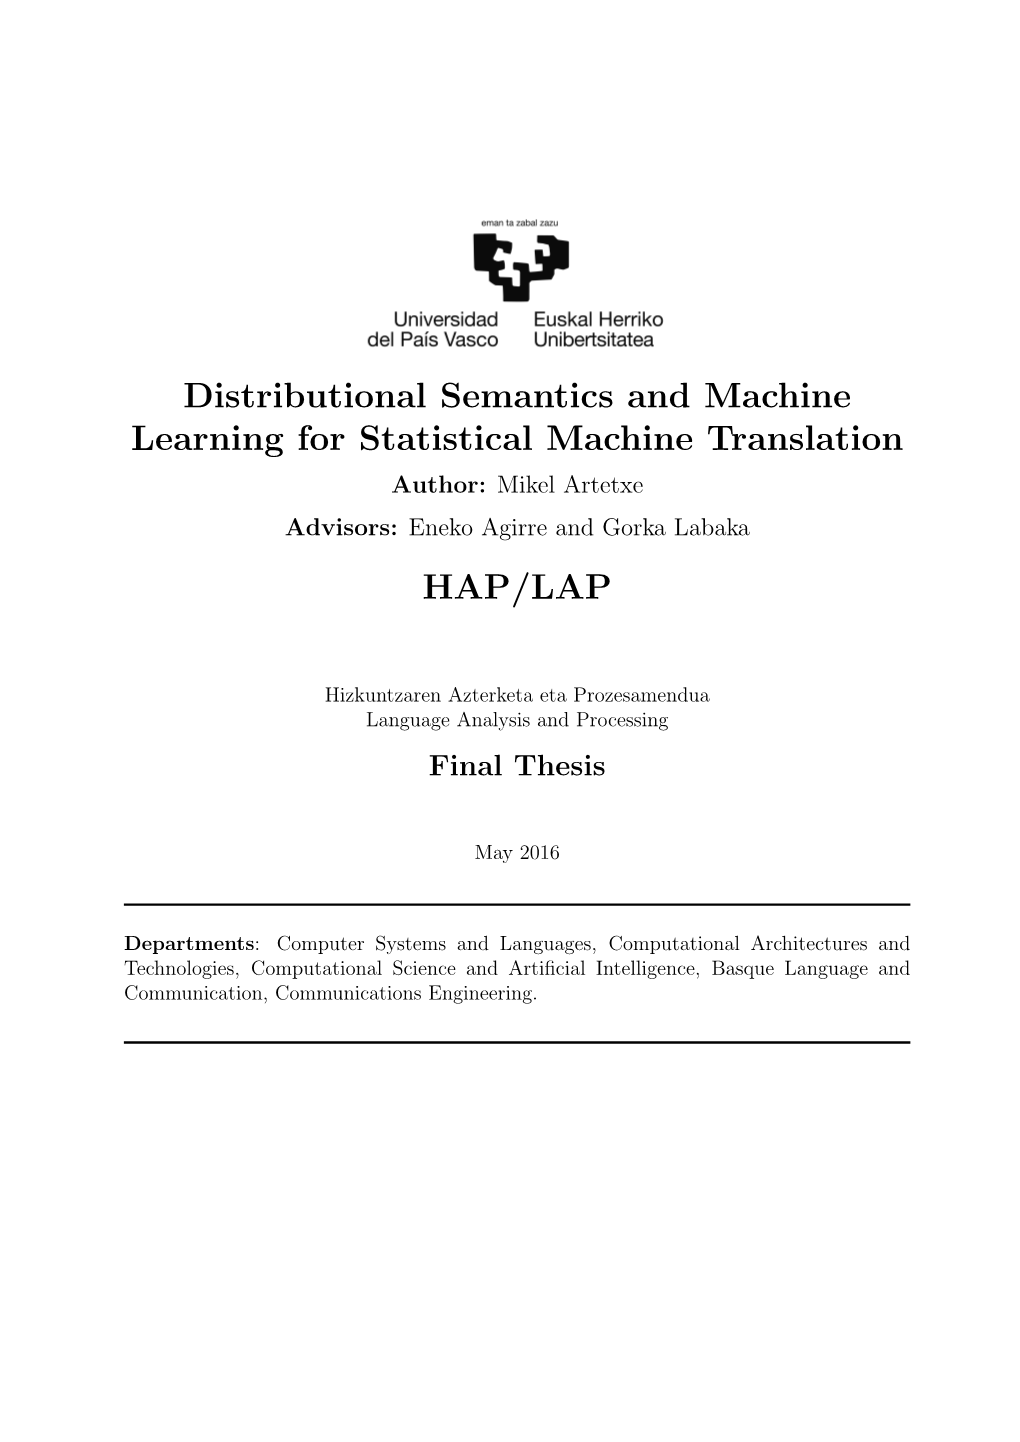 Distributional Semantics and Machine Learning for Statistical Machine Translation HAP/LAP